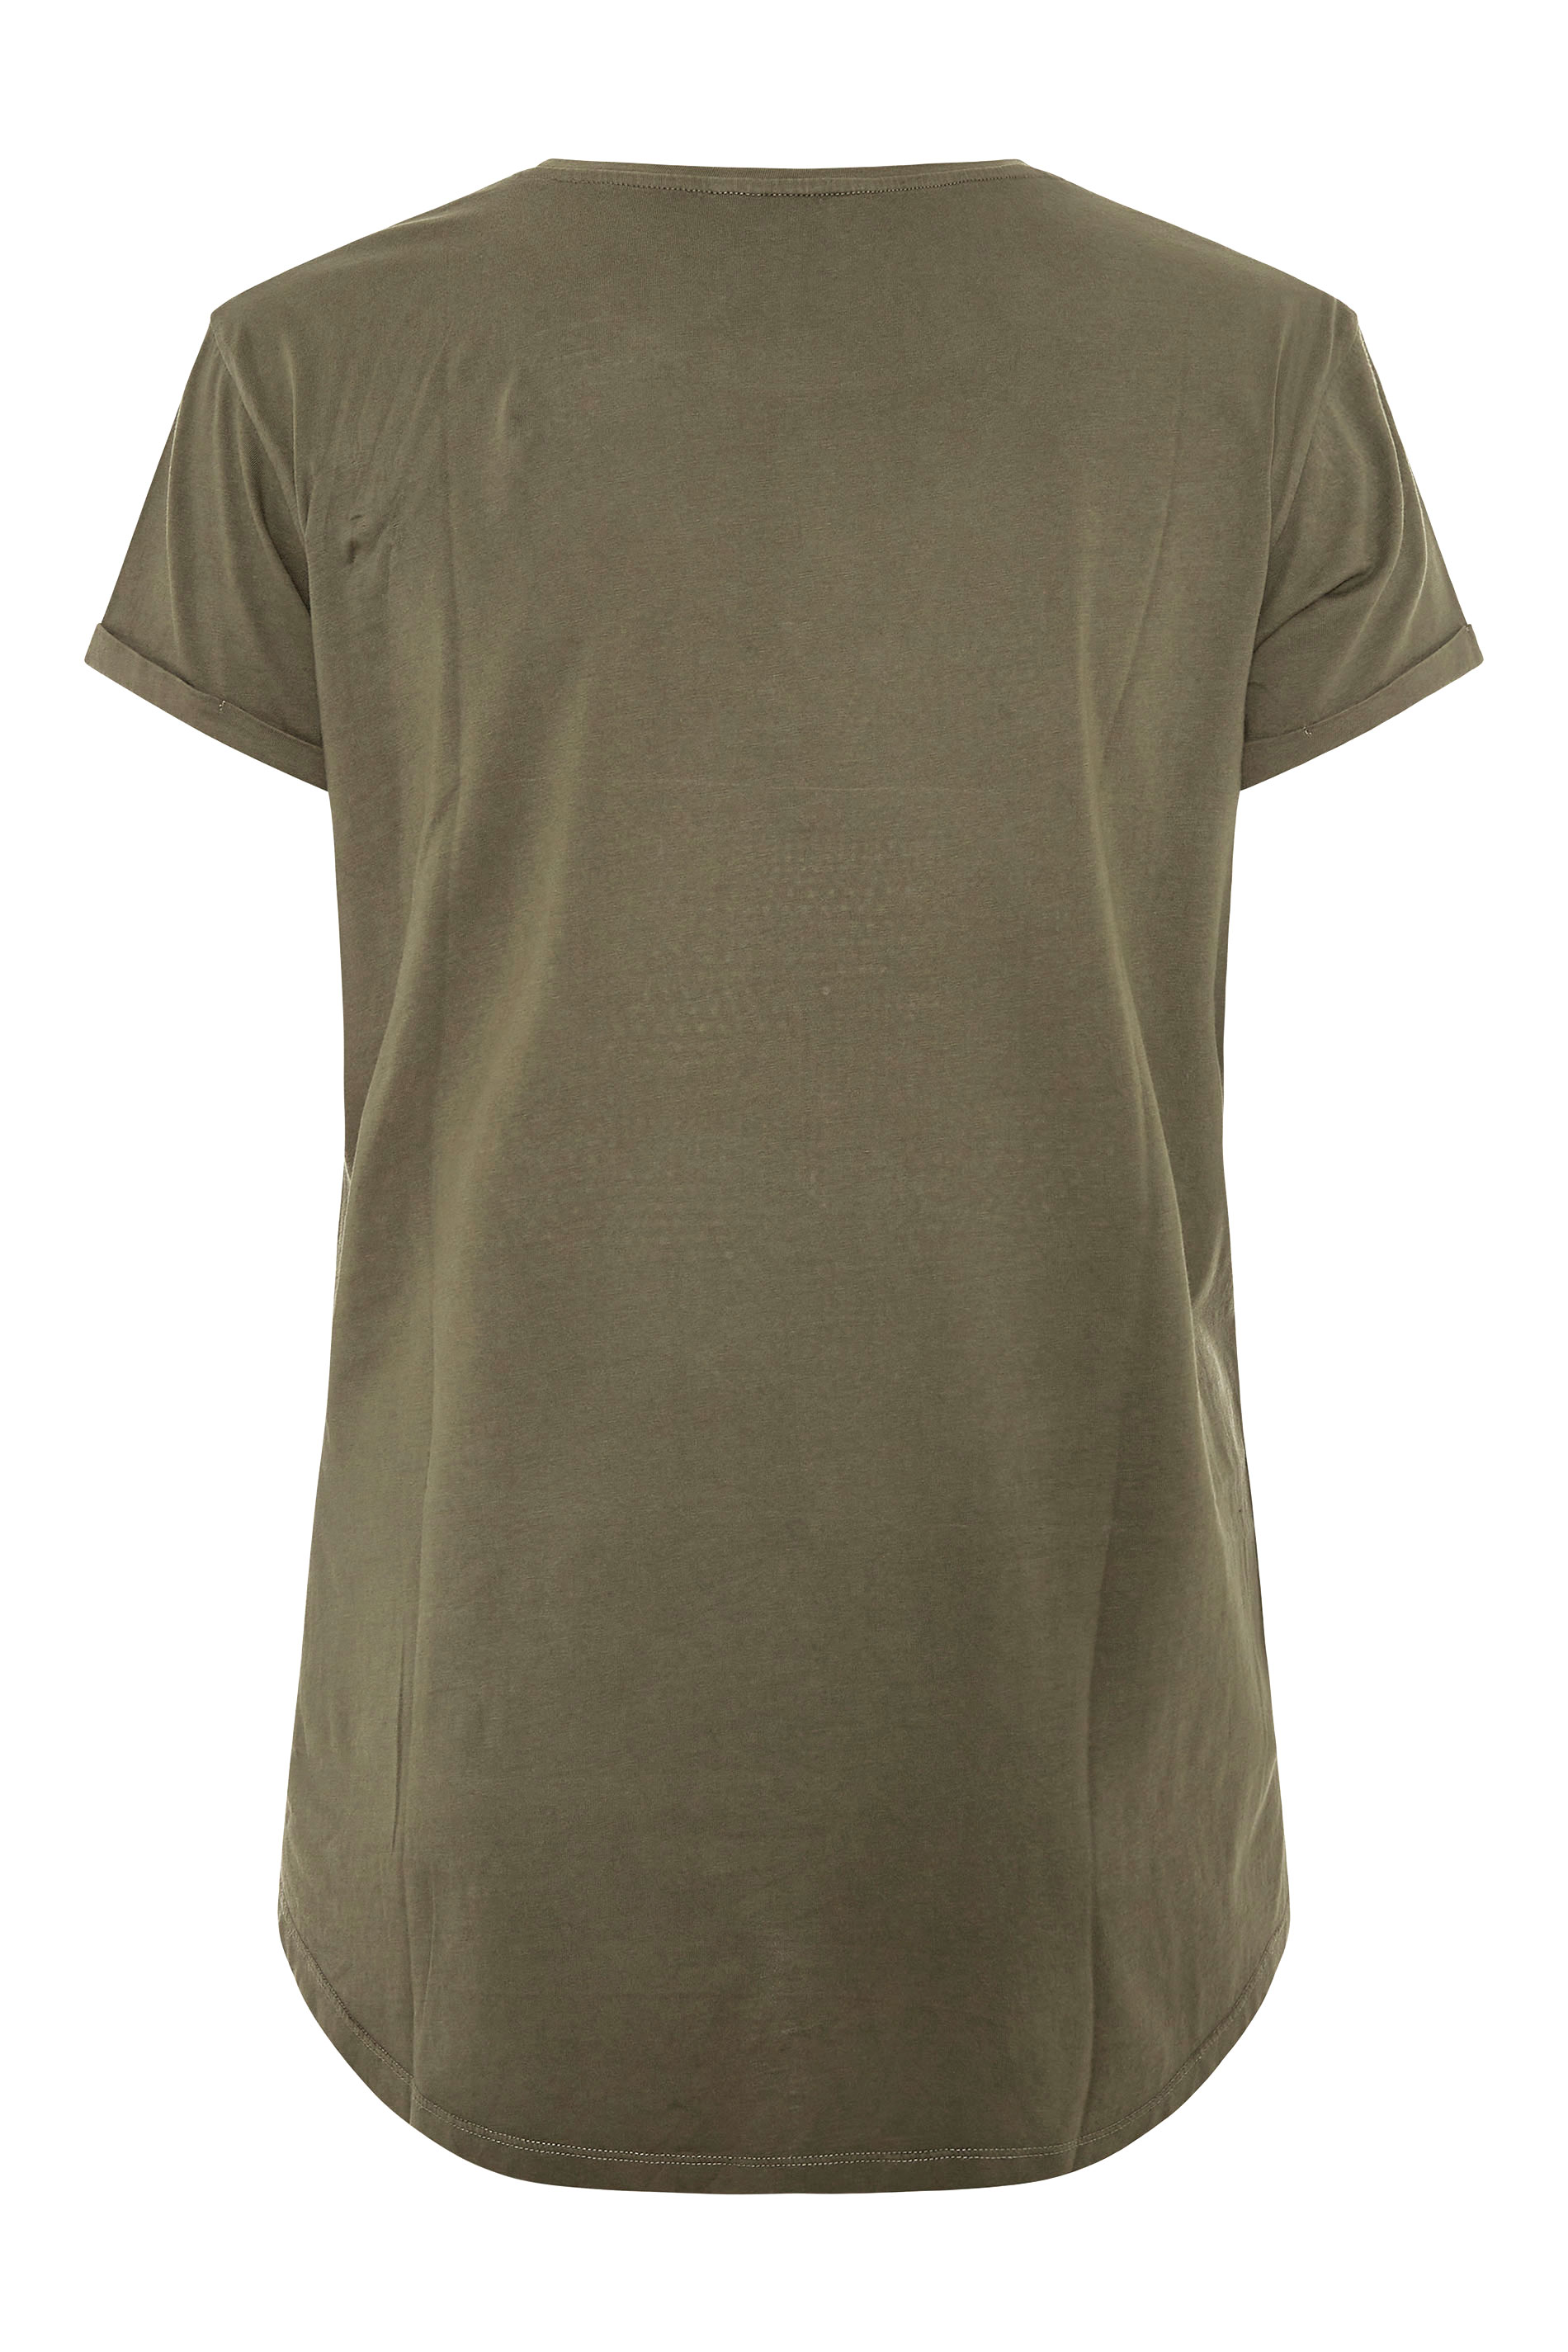 Grande taille  Tops Grande taille  T-Shirts | T-Shirt Vert Kaki Coeur Clouté Ourlet Plongeant - YW98894